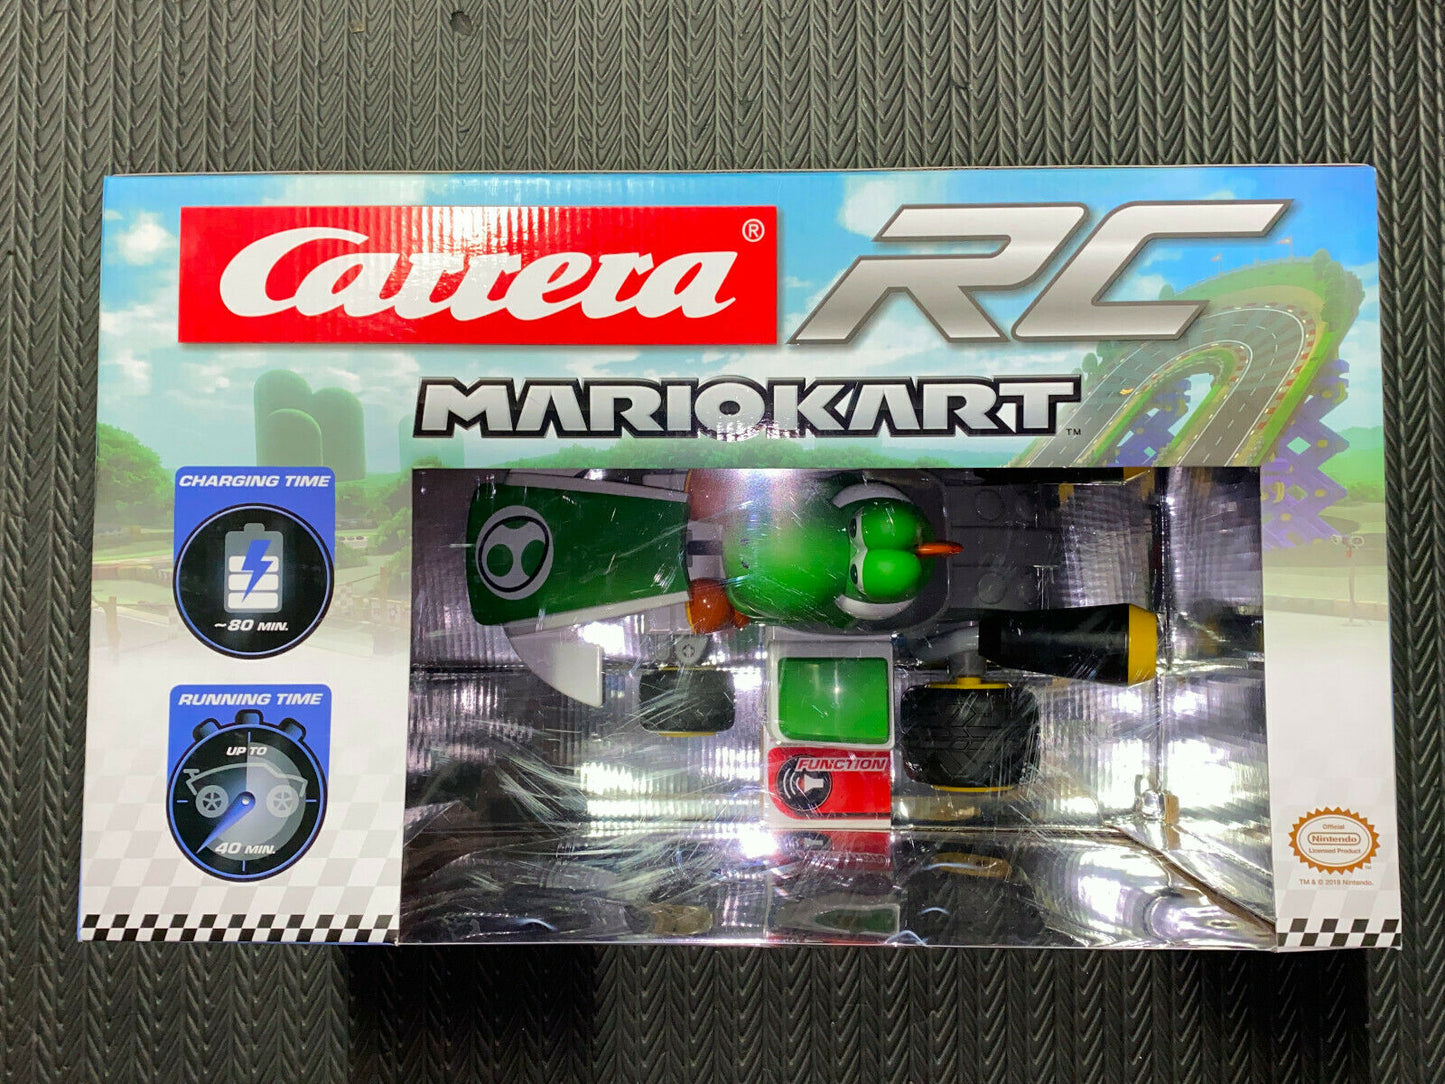 Carrera RC Mario Kart 1:16 2.4GHz Yoshi RARE and VHTF NIP RC CAR